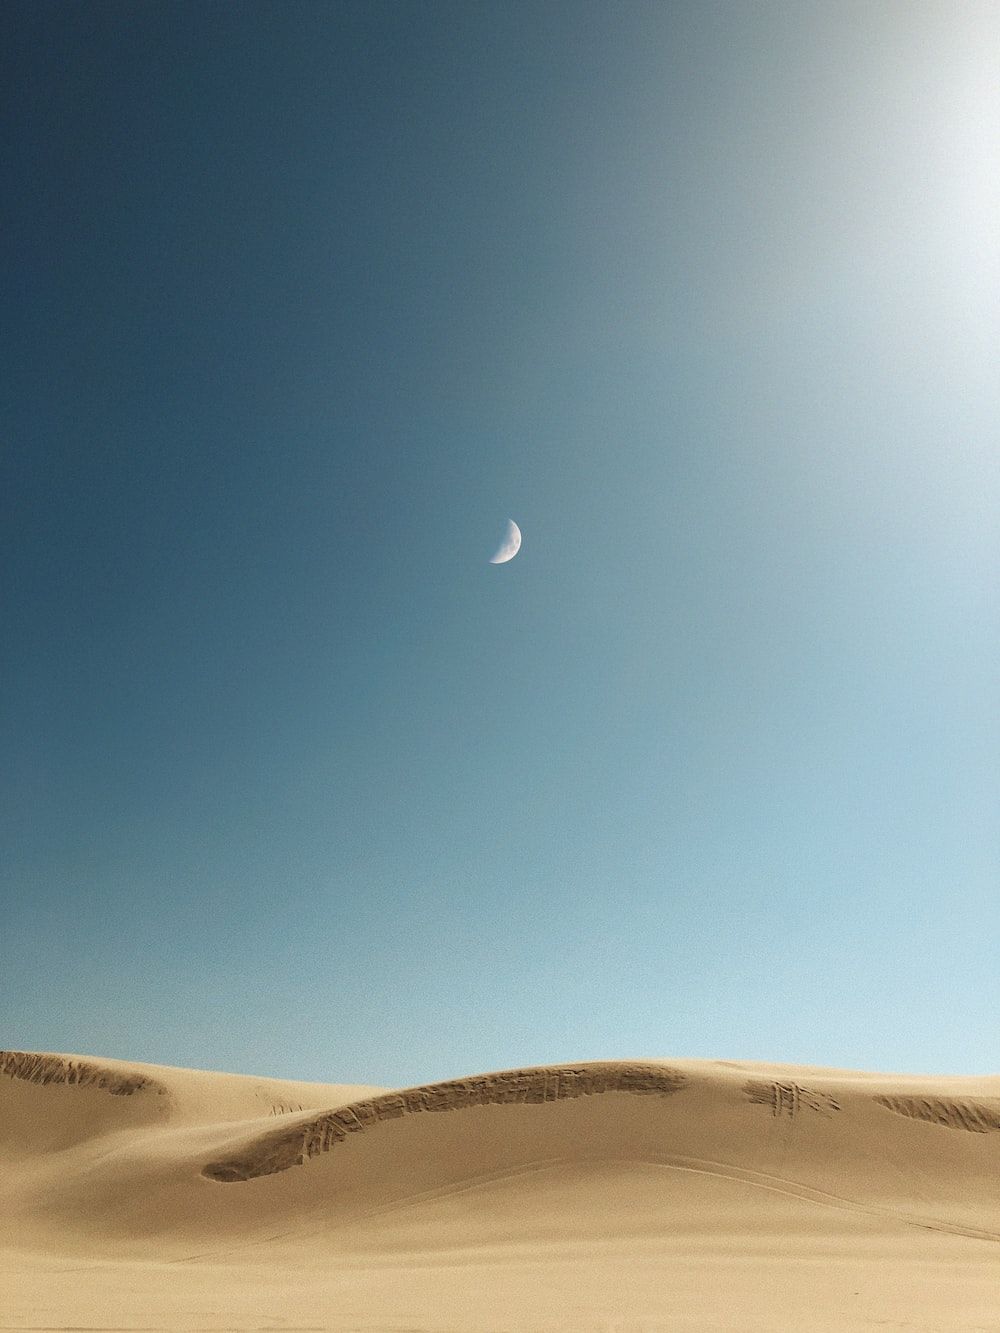 Free Desert Picture